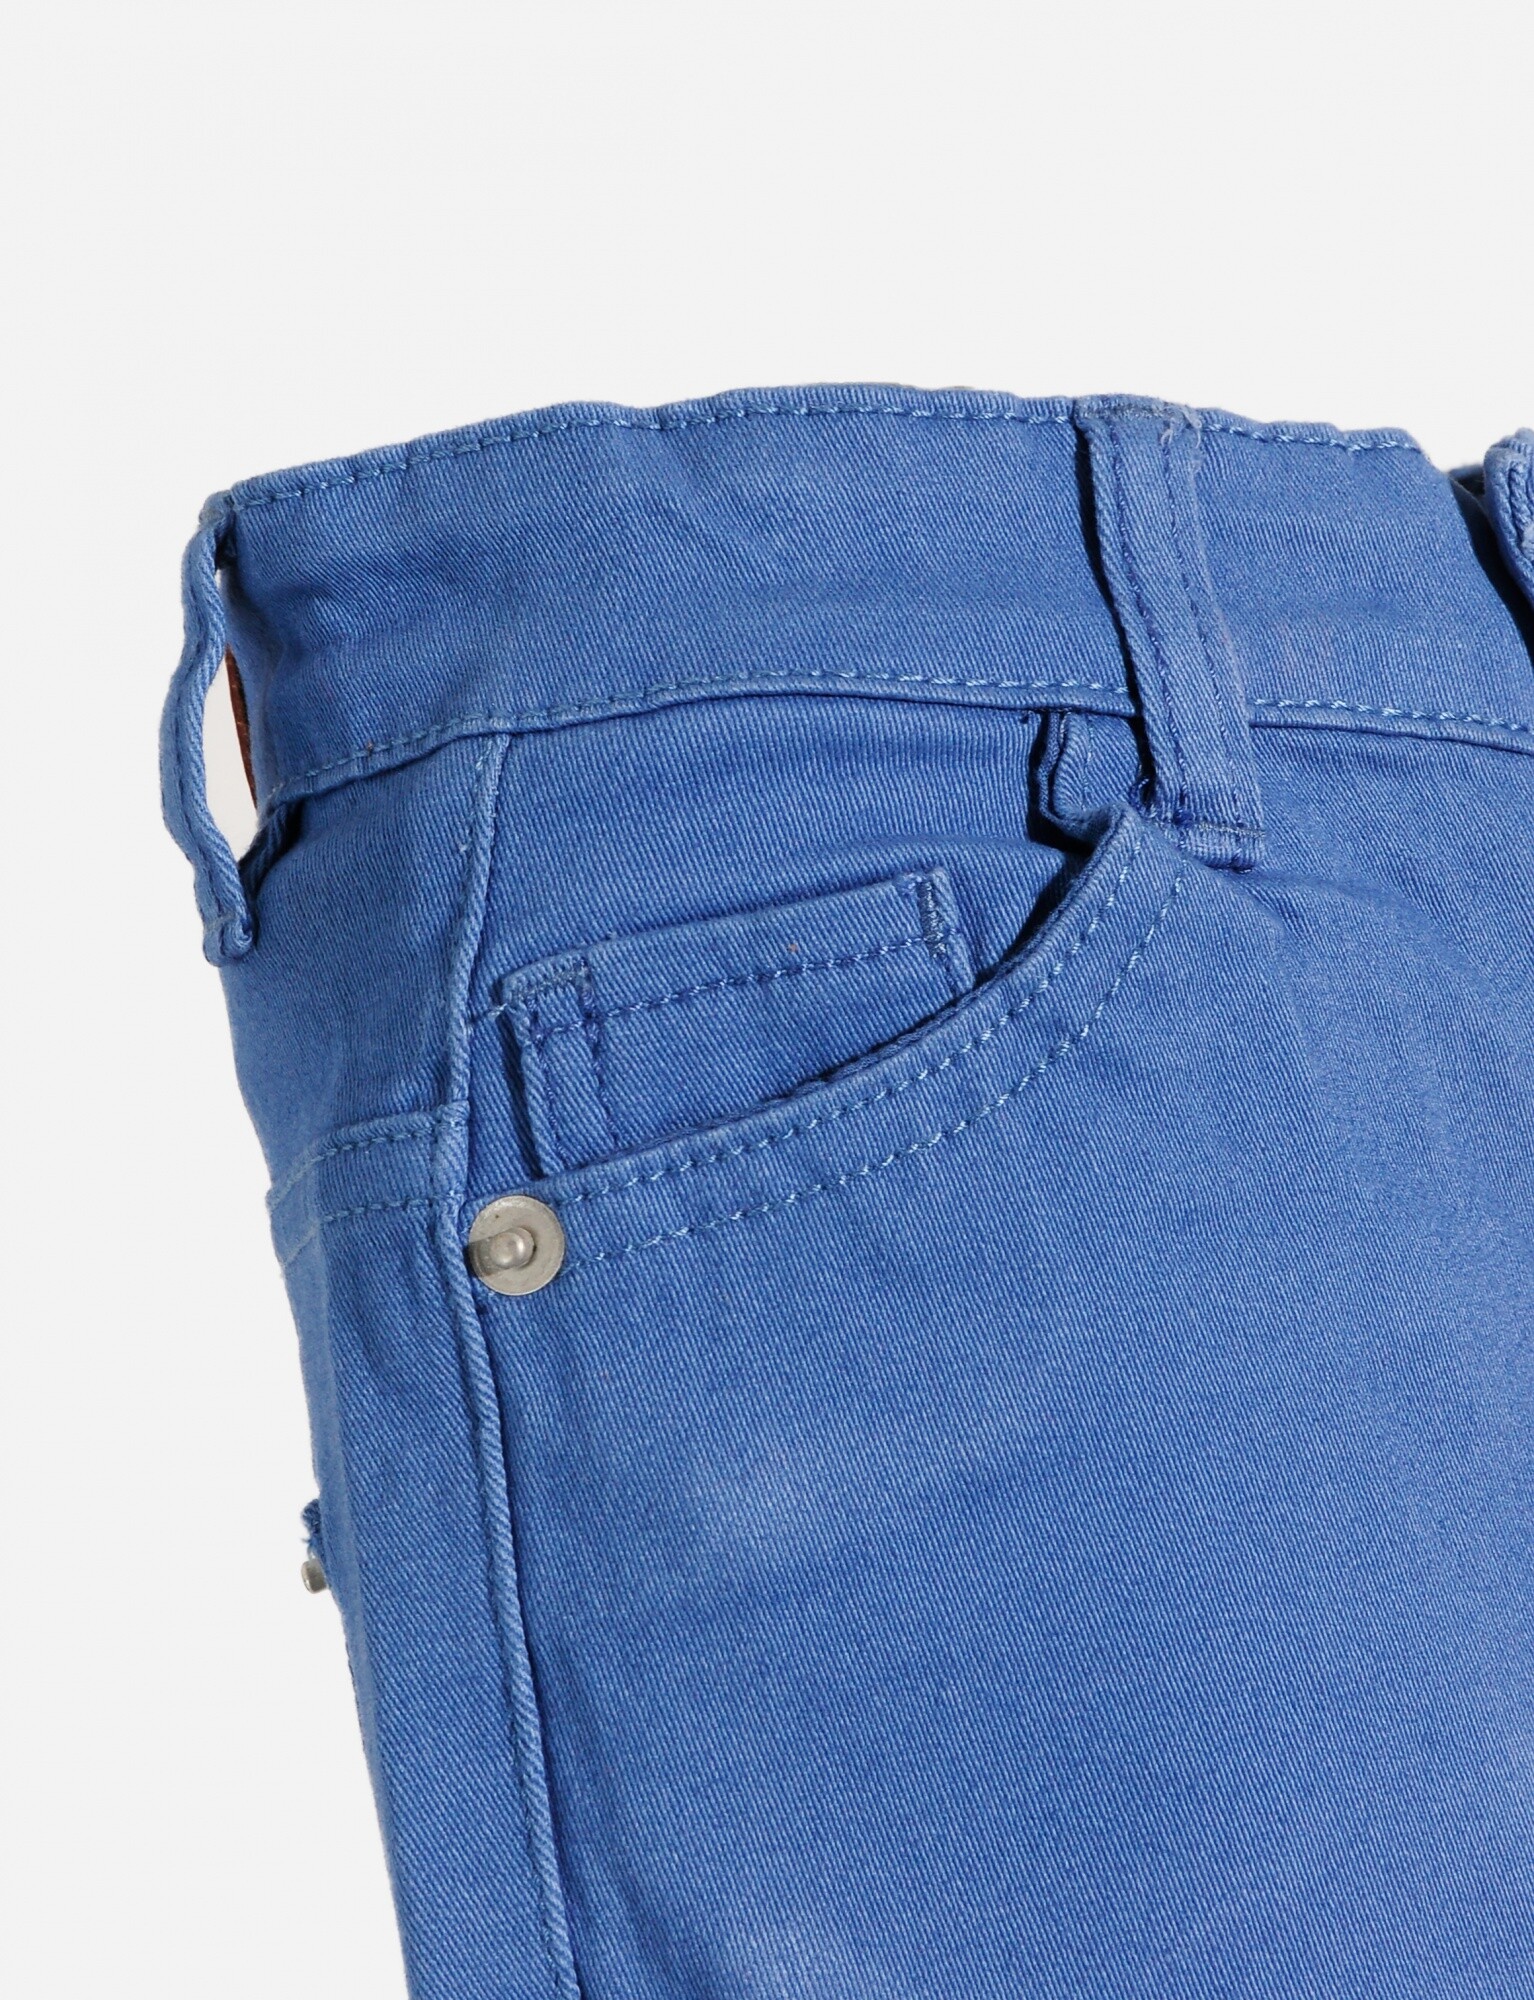 Pantalon Azul Petroleo D35737 - Adhara Boutique